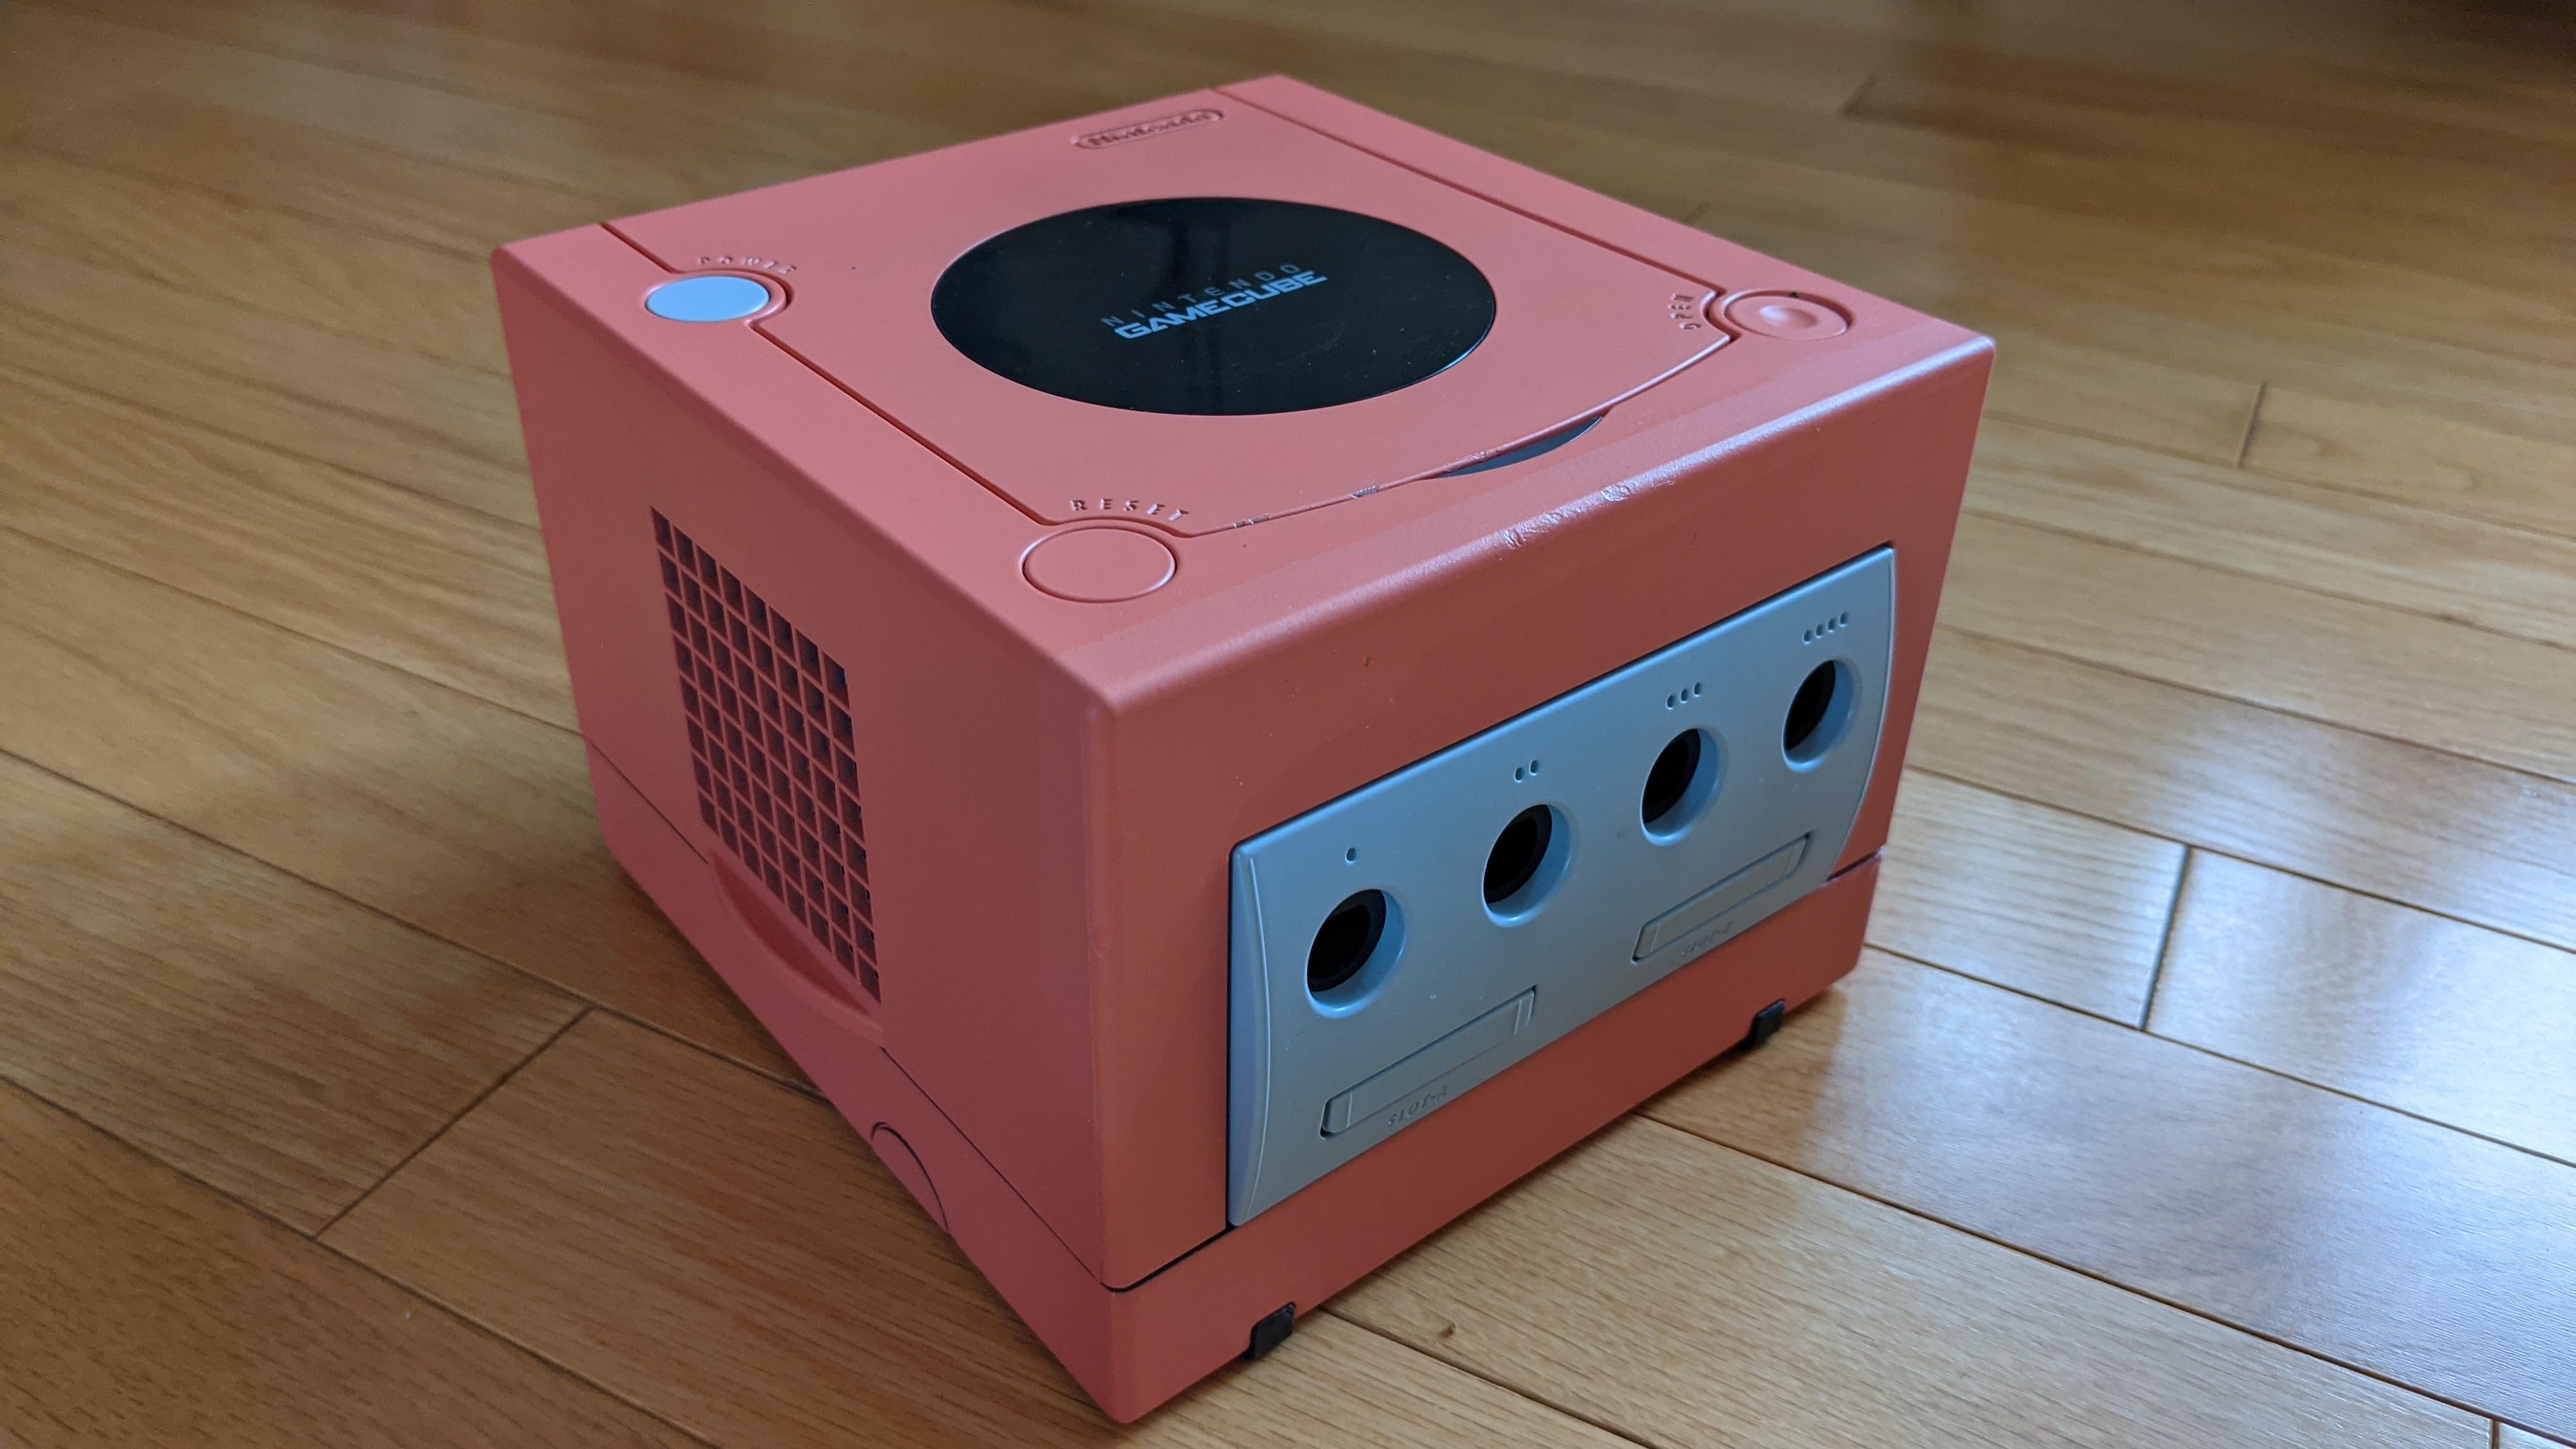 A peach Nintendo GameCube that's actually a custom mini PC build